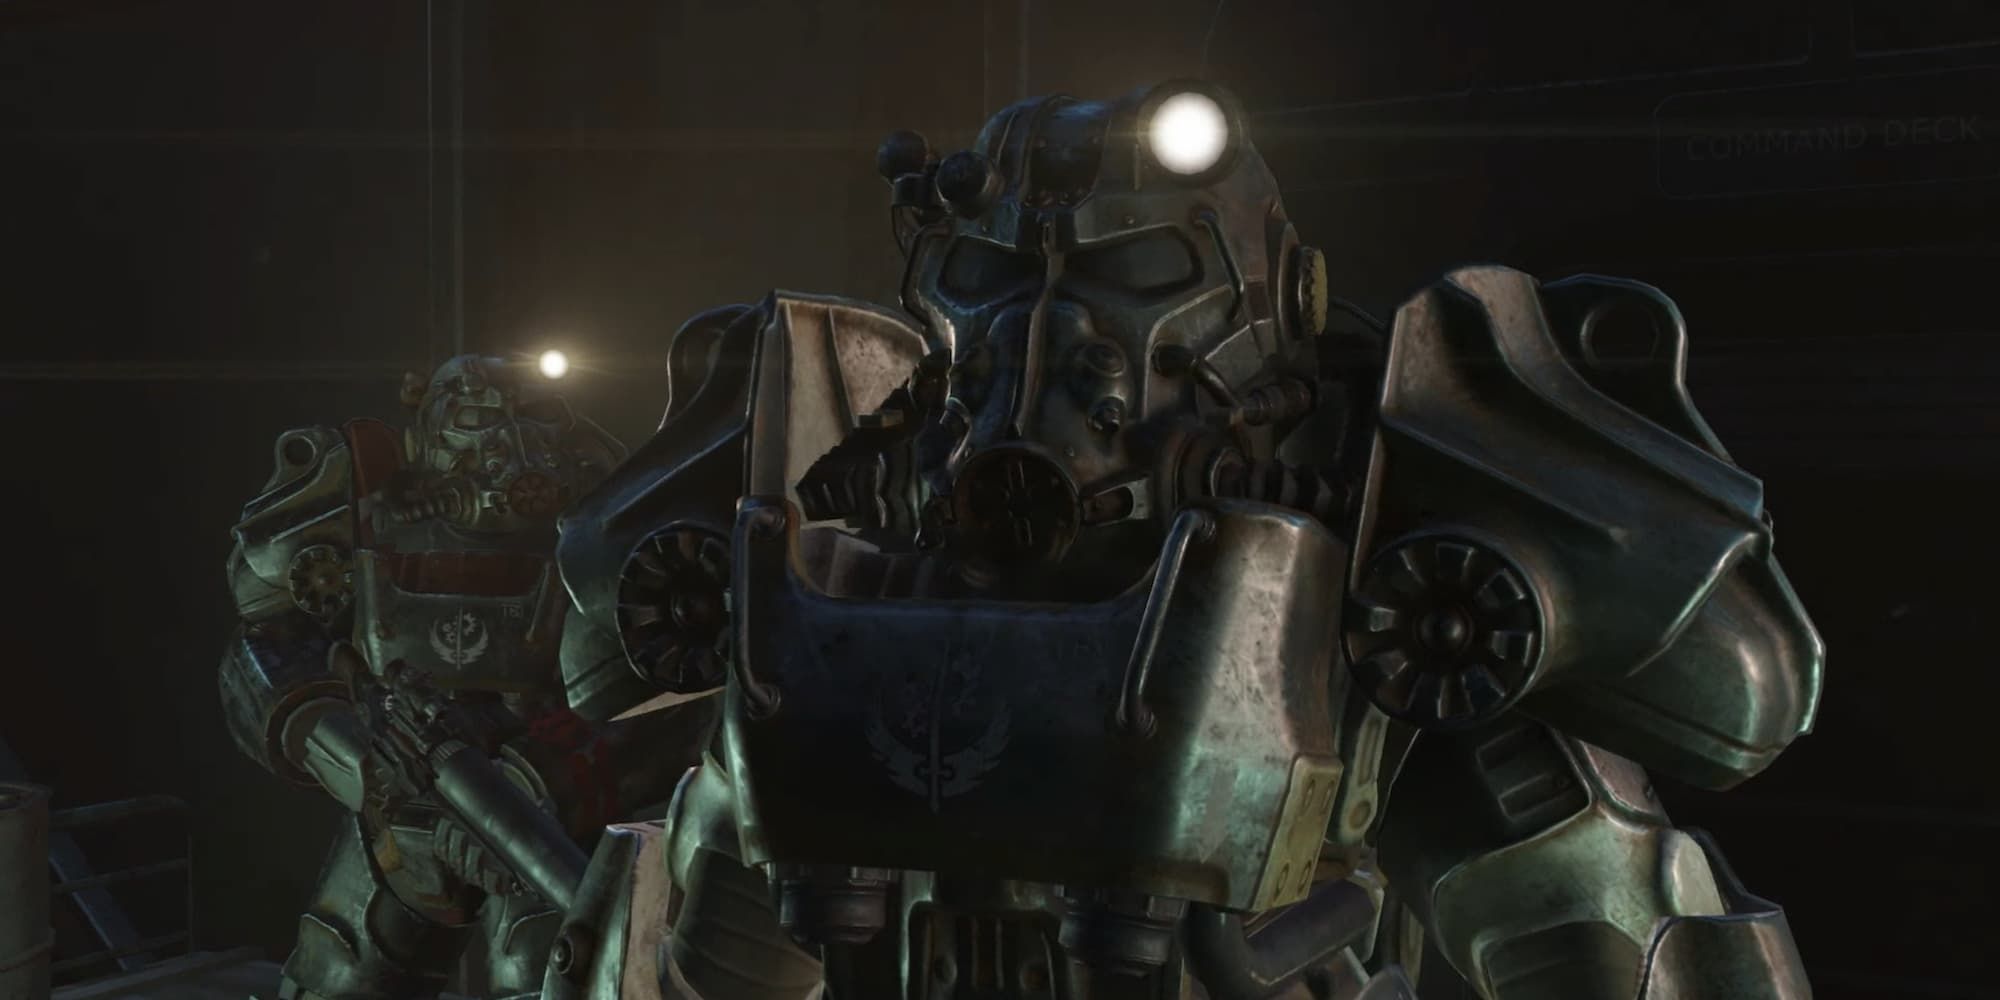 Brotherhood of Steel T-60 power armor in Fallout 4